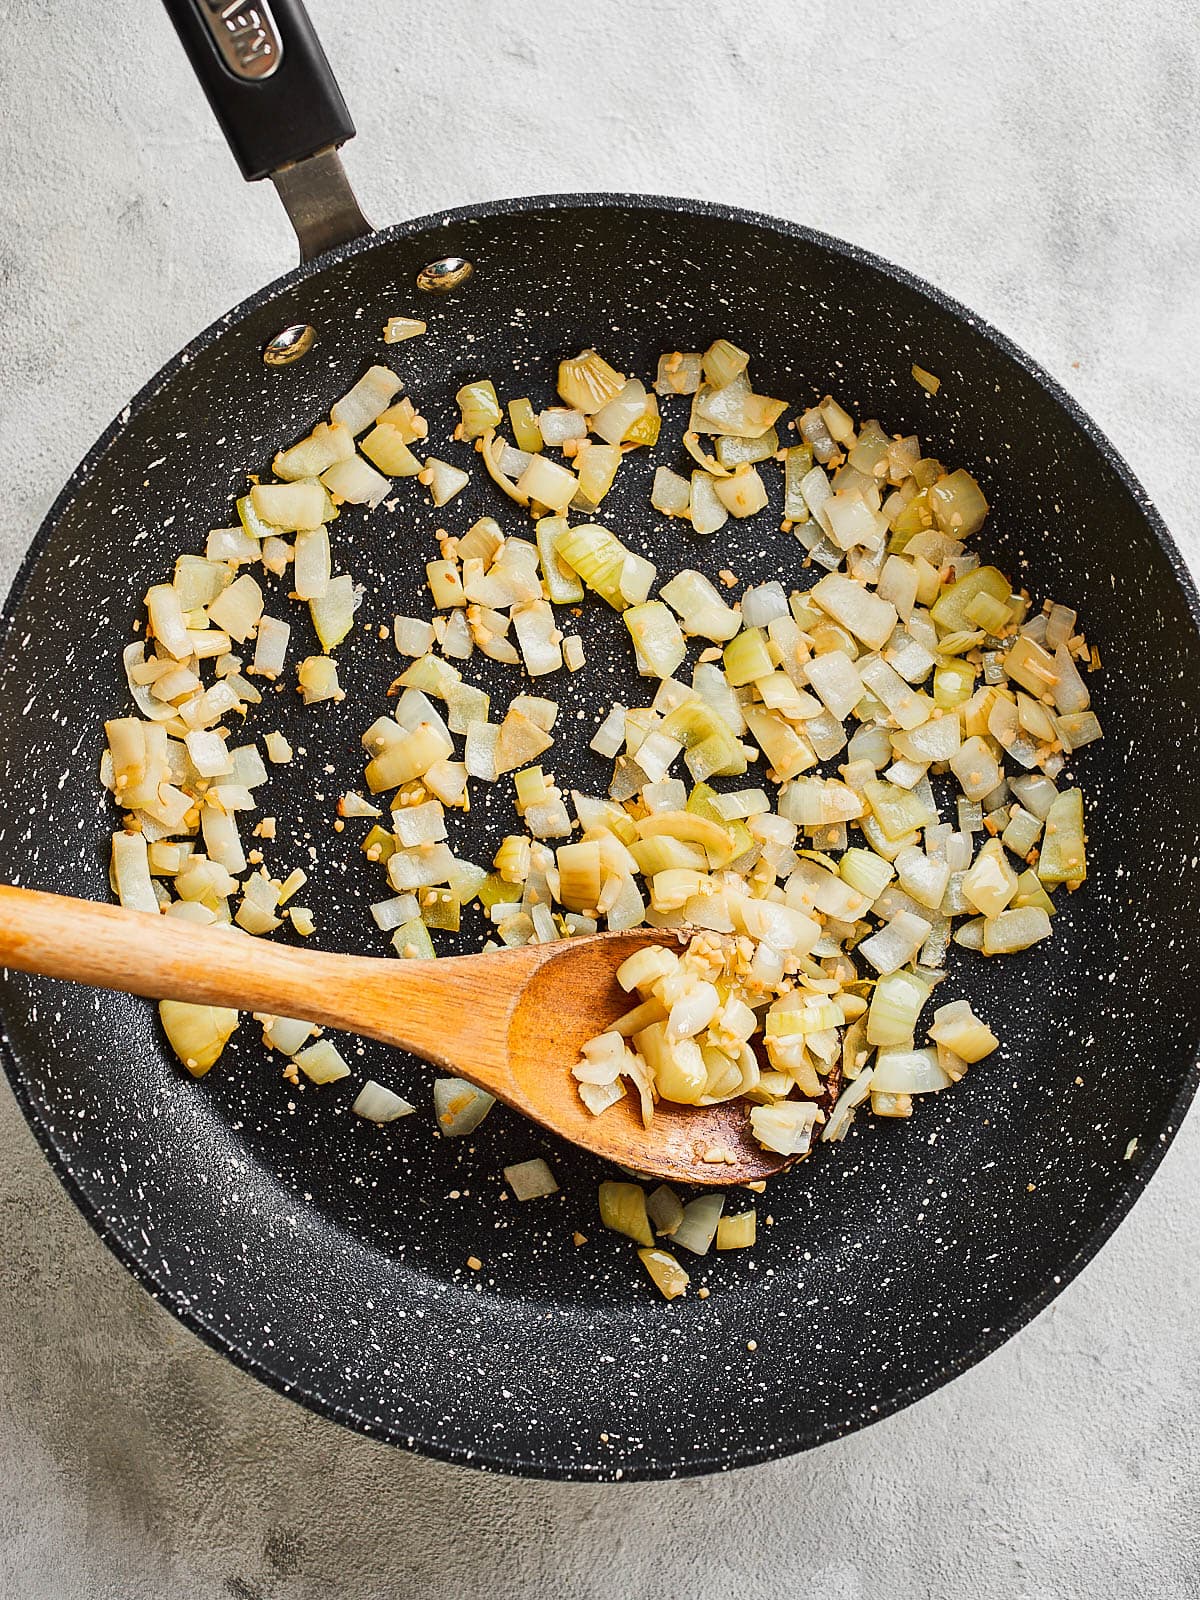 Frying onion and garlic in a frying pan